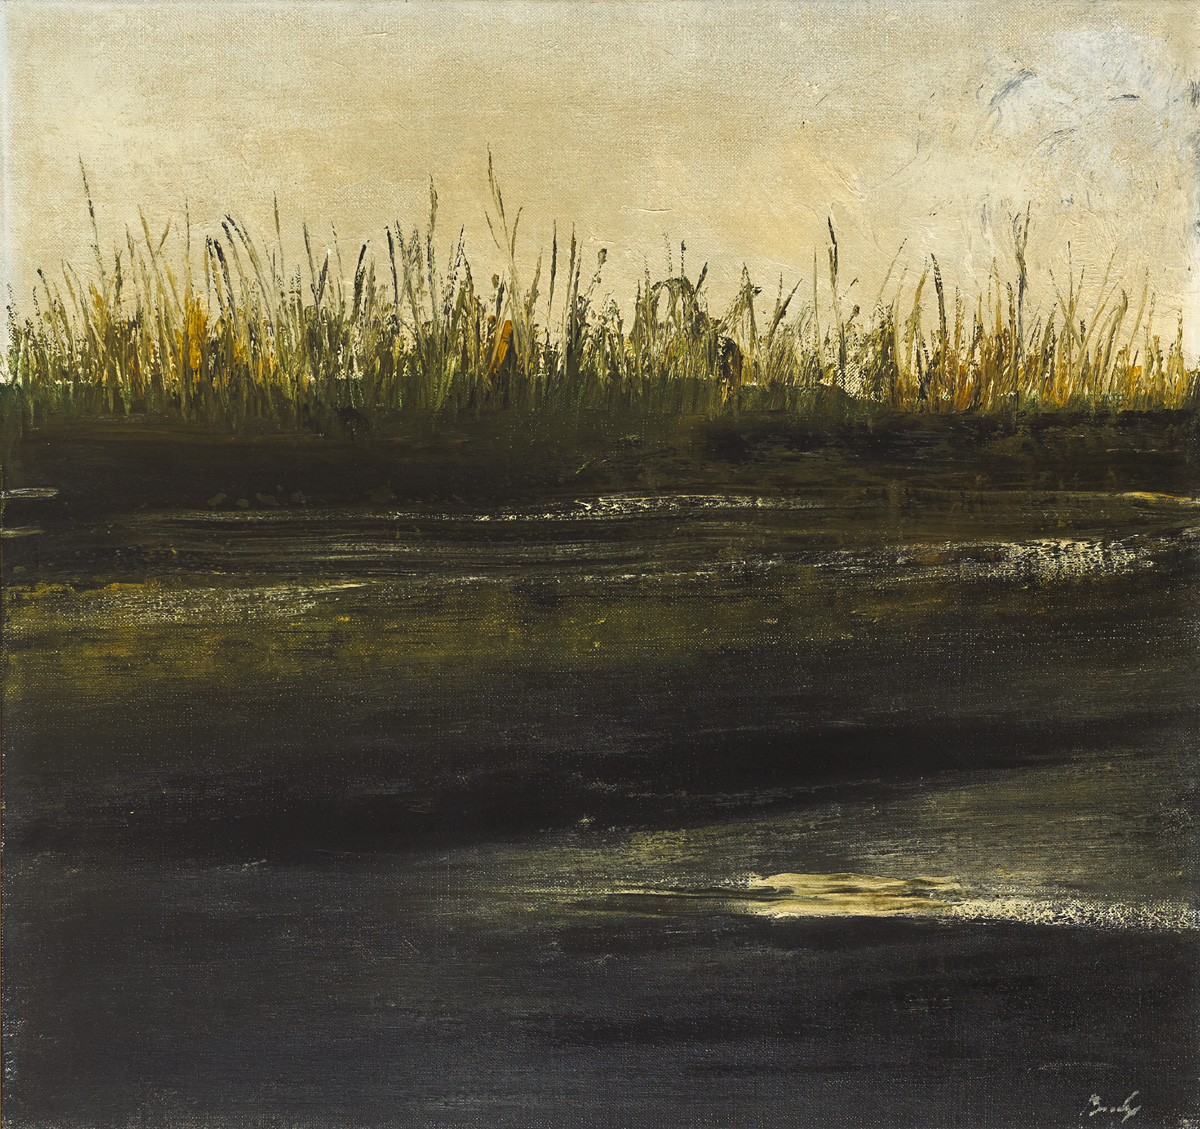 ALONG THE BOYNE RIVER, 1965 by Charles Brady HRHA (1926-1997) HRHA (1926-1997) at Whyte's Auctions